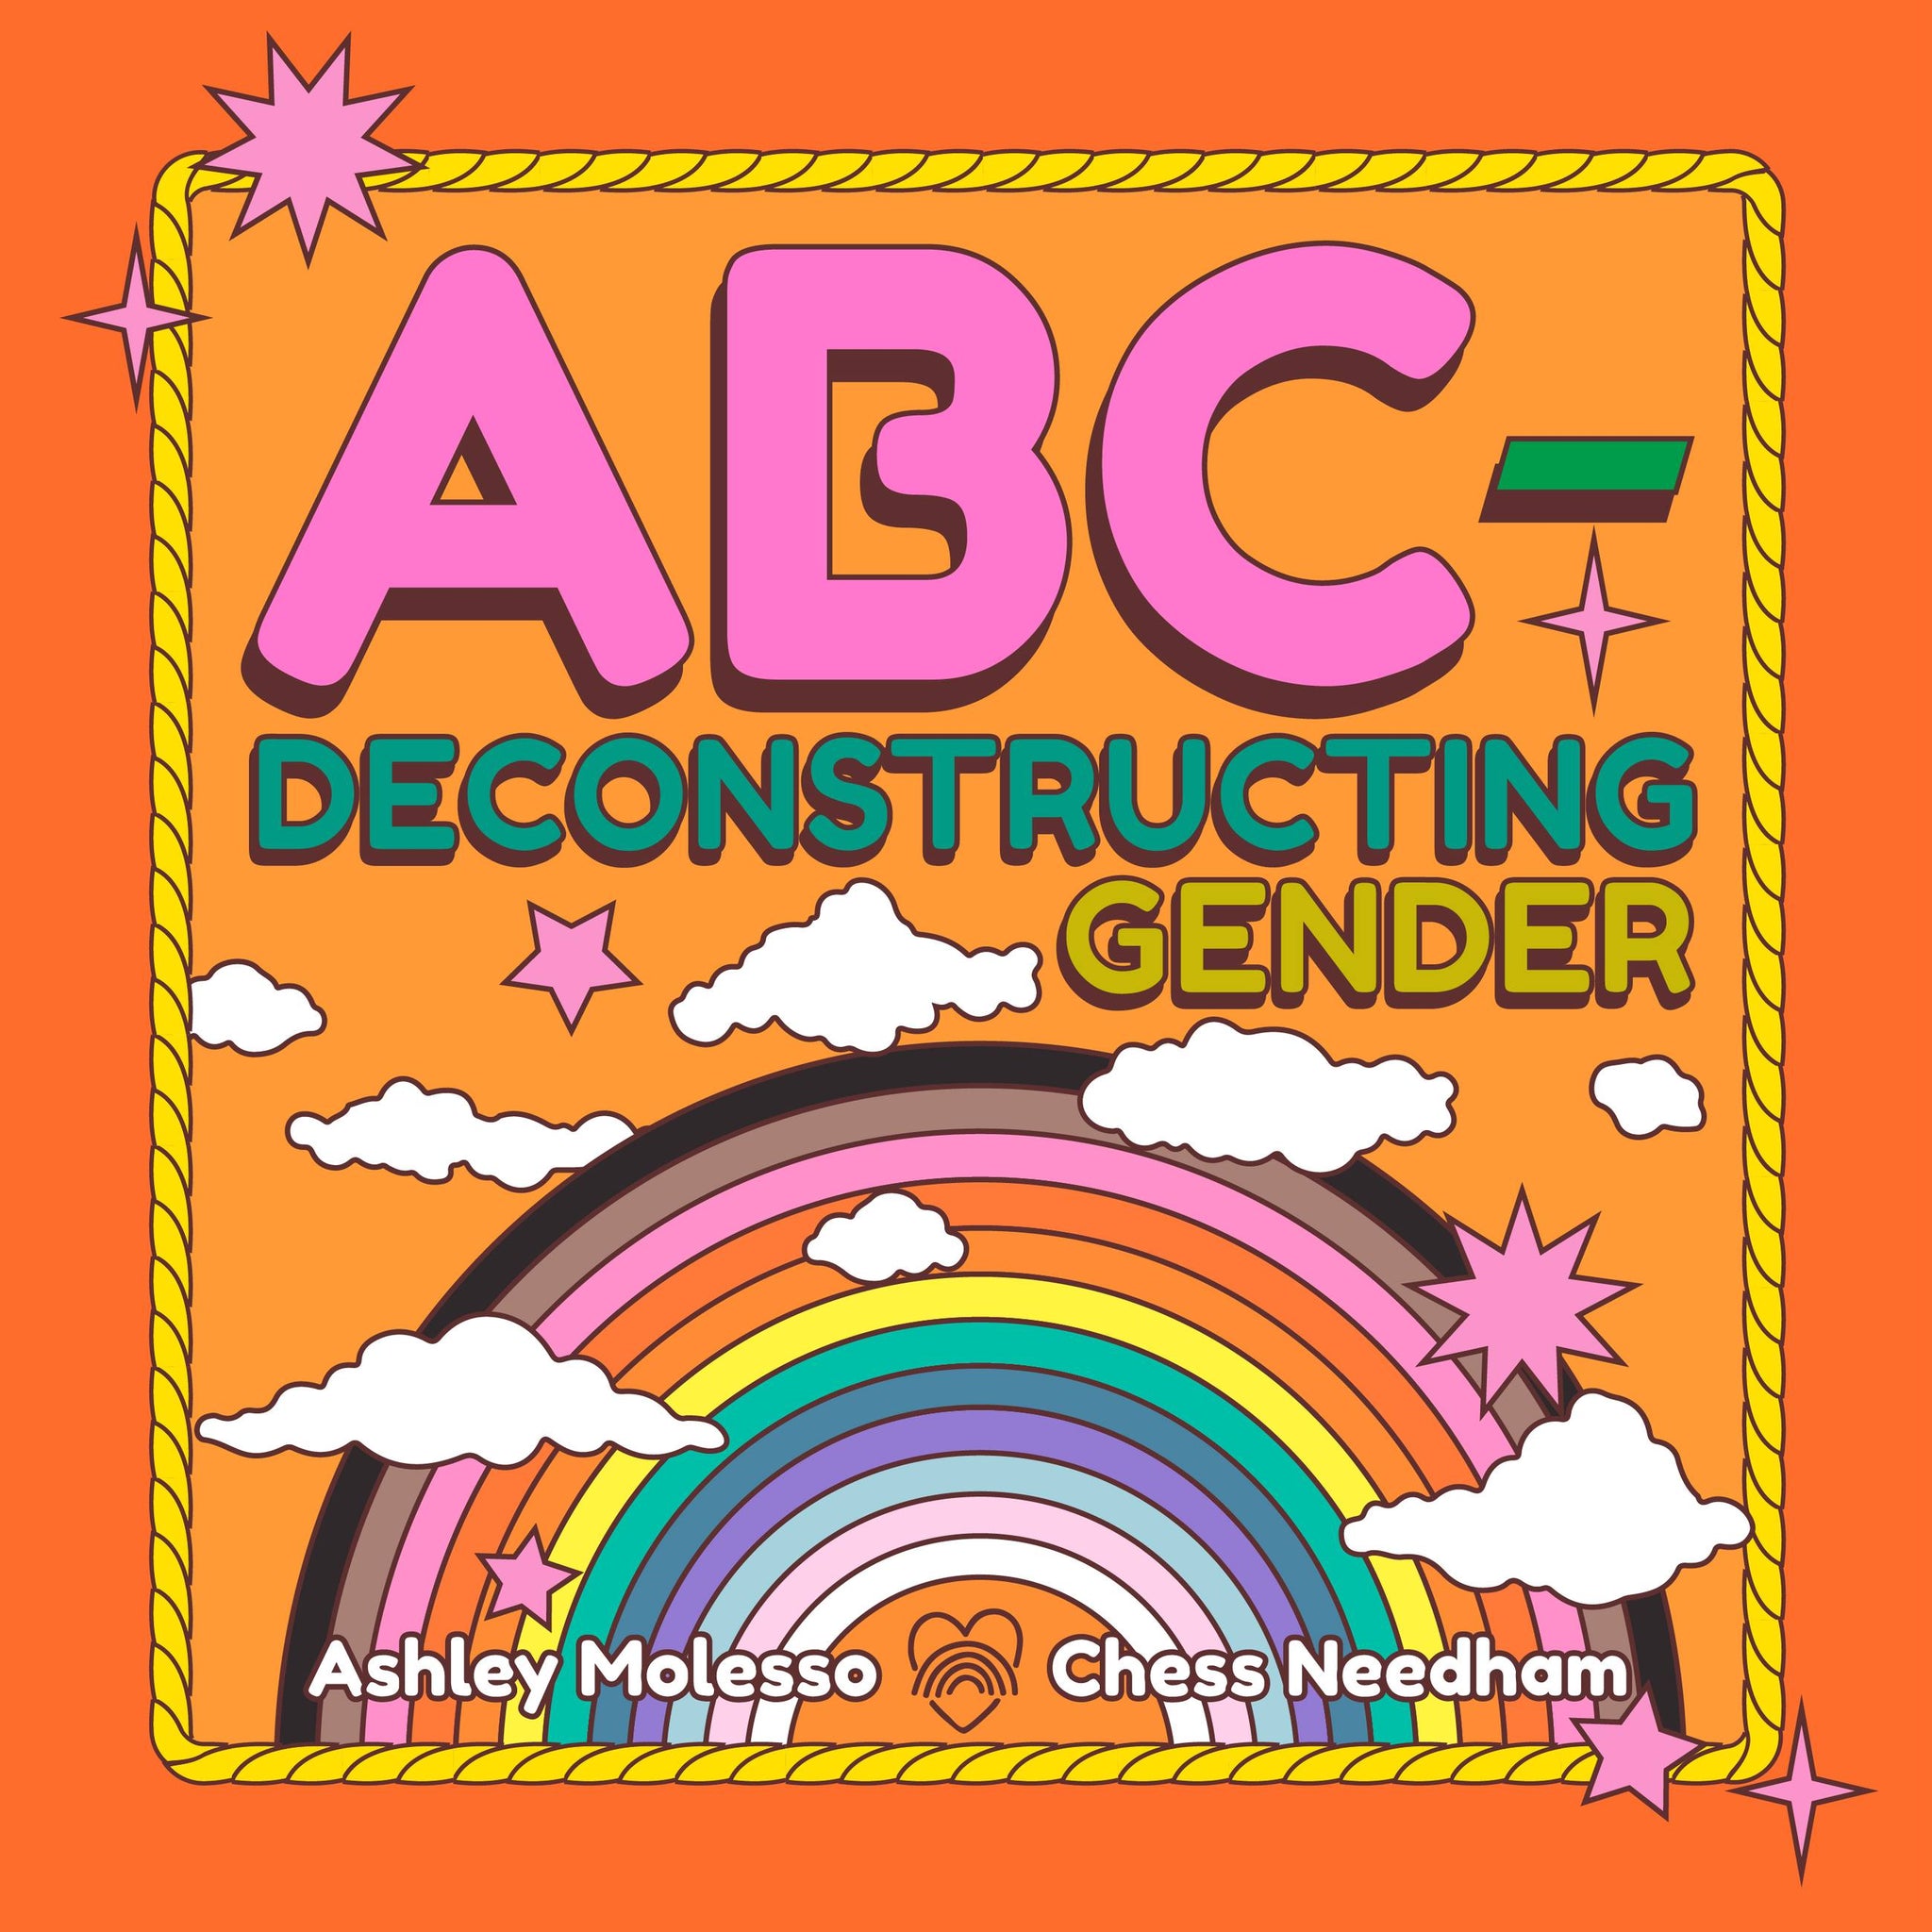 ABC-Deconstructing Gender by Ashley Molesso + Chess Needham